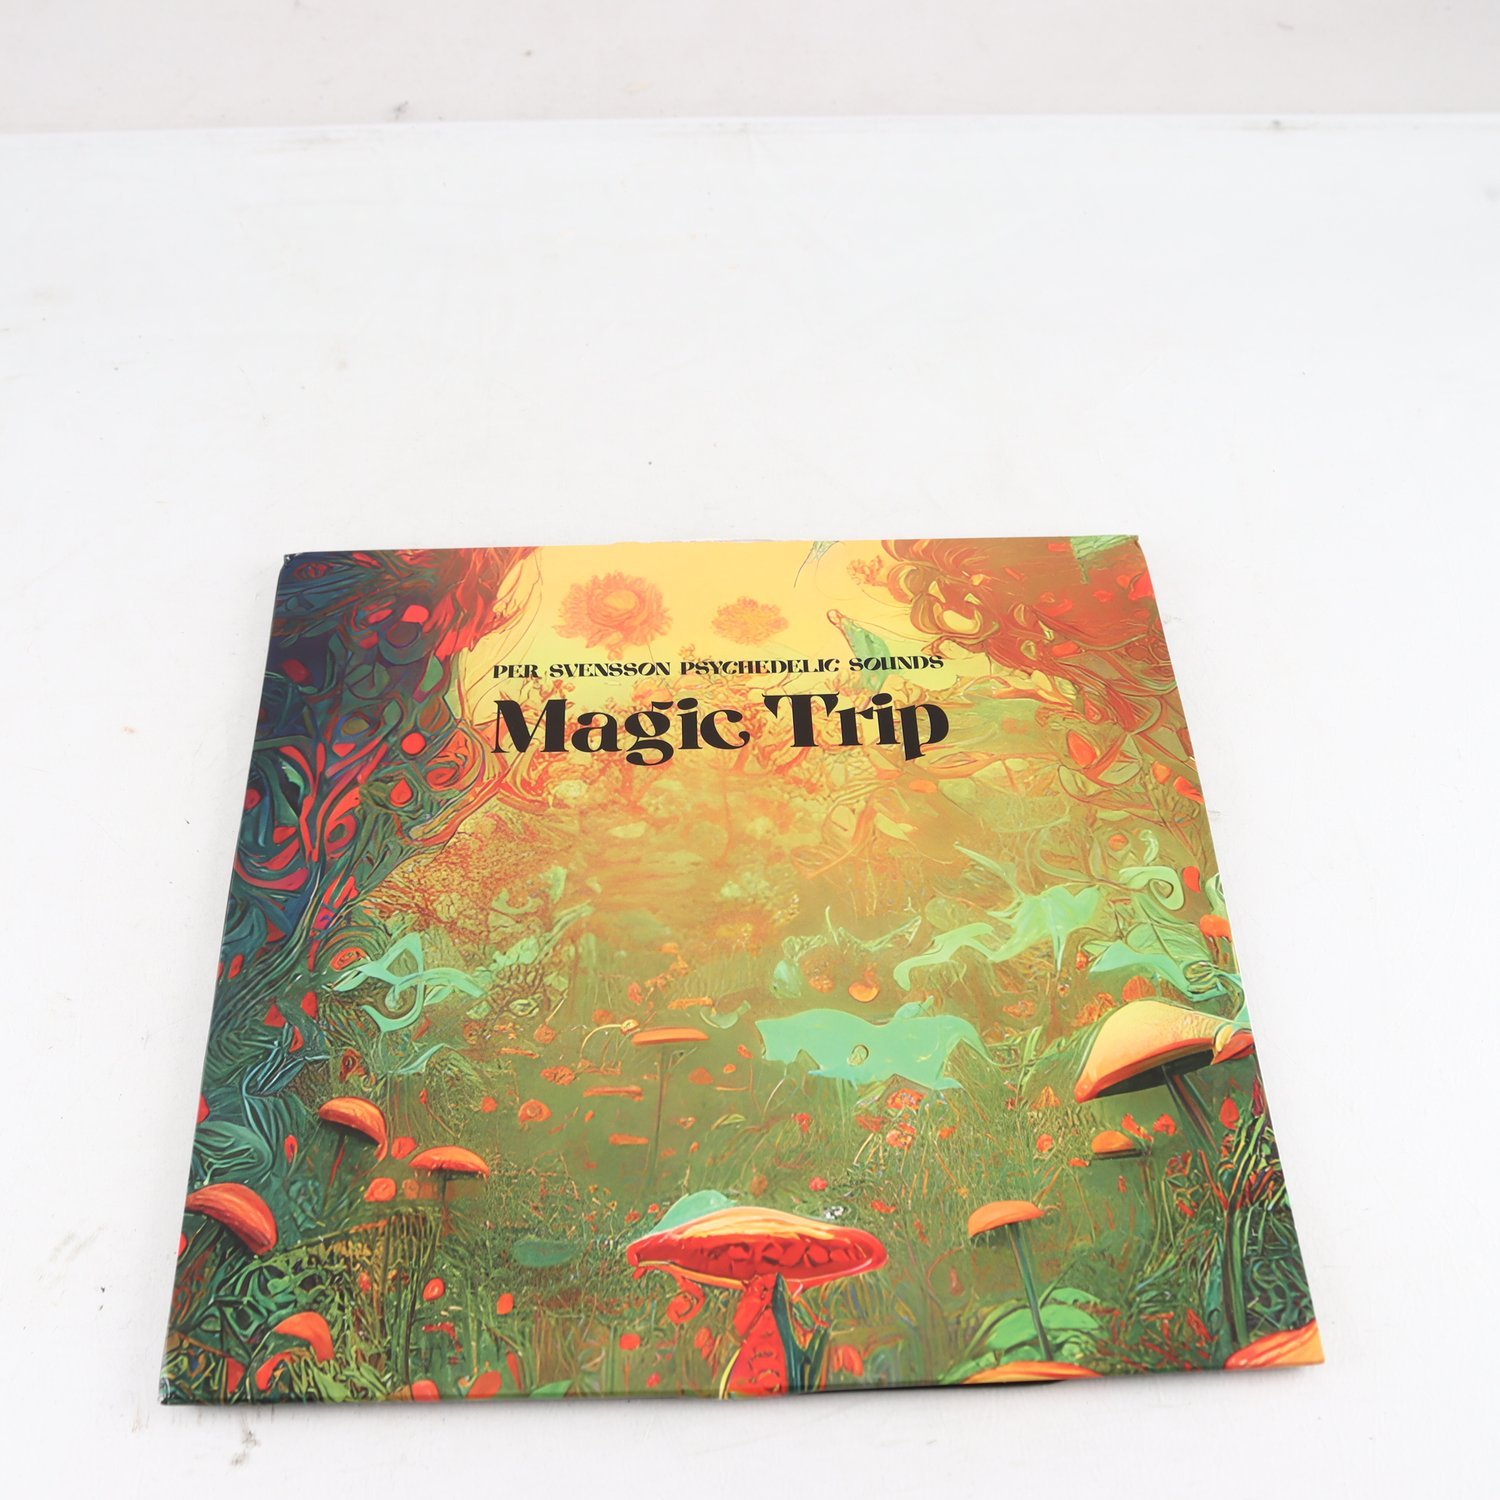 LP Per Svensson Psychedelic Sounds, Magic Trip